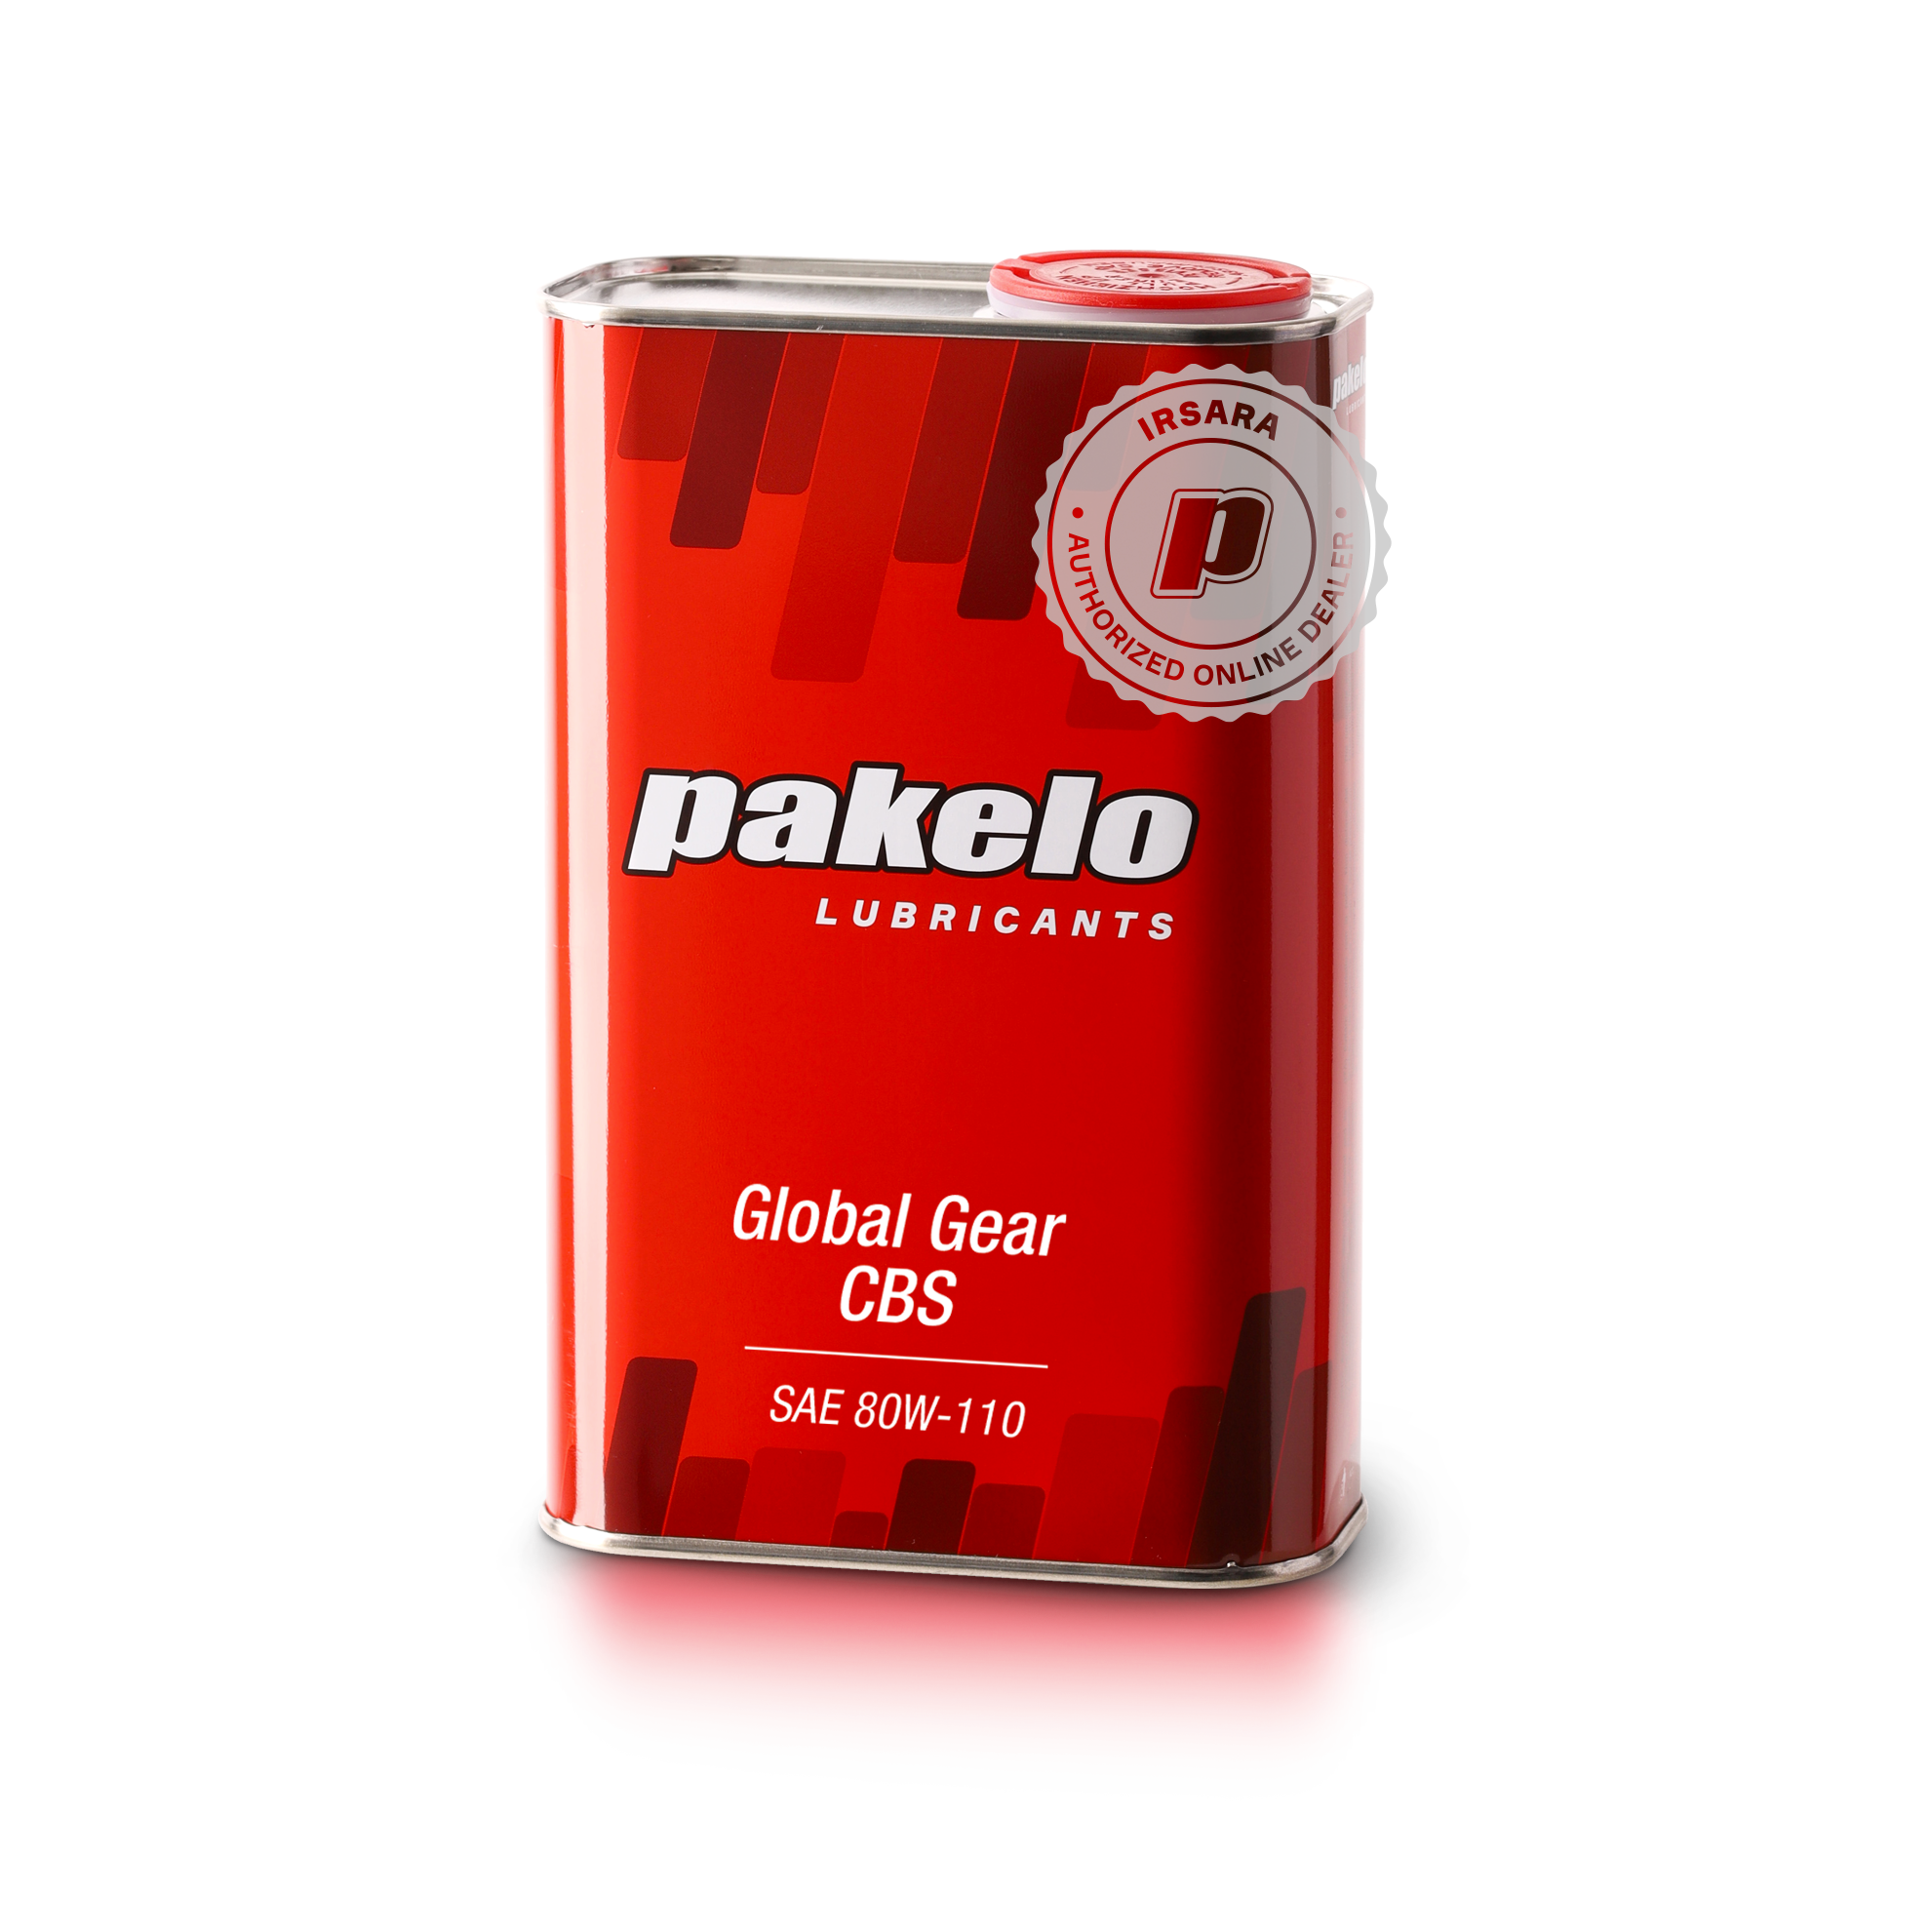 Pakelo Global Gear Cbs Sae 80W-110 (1L)